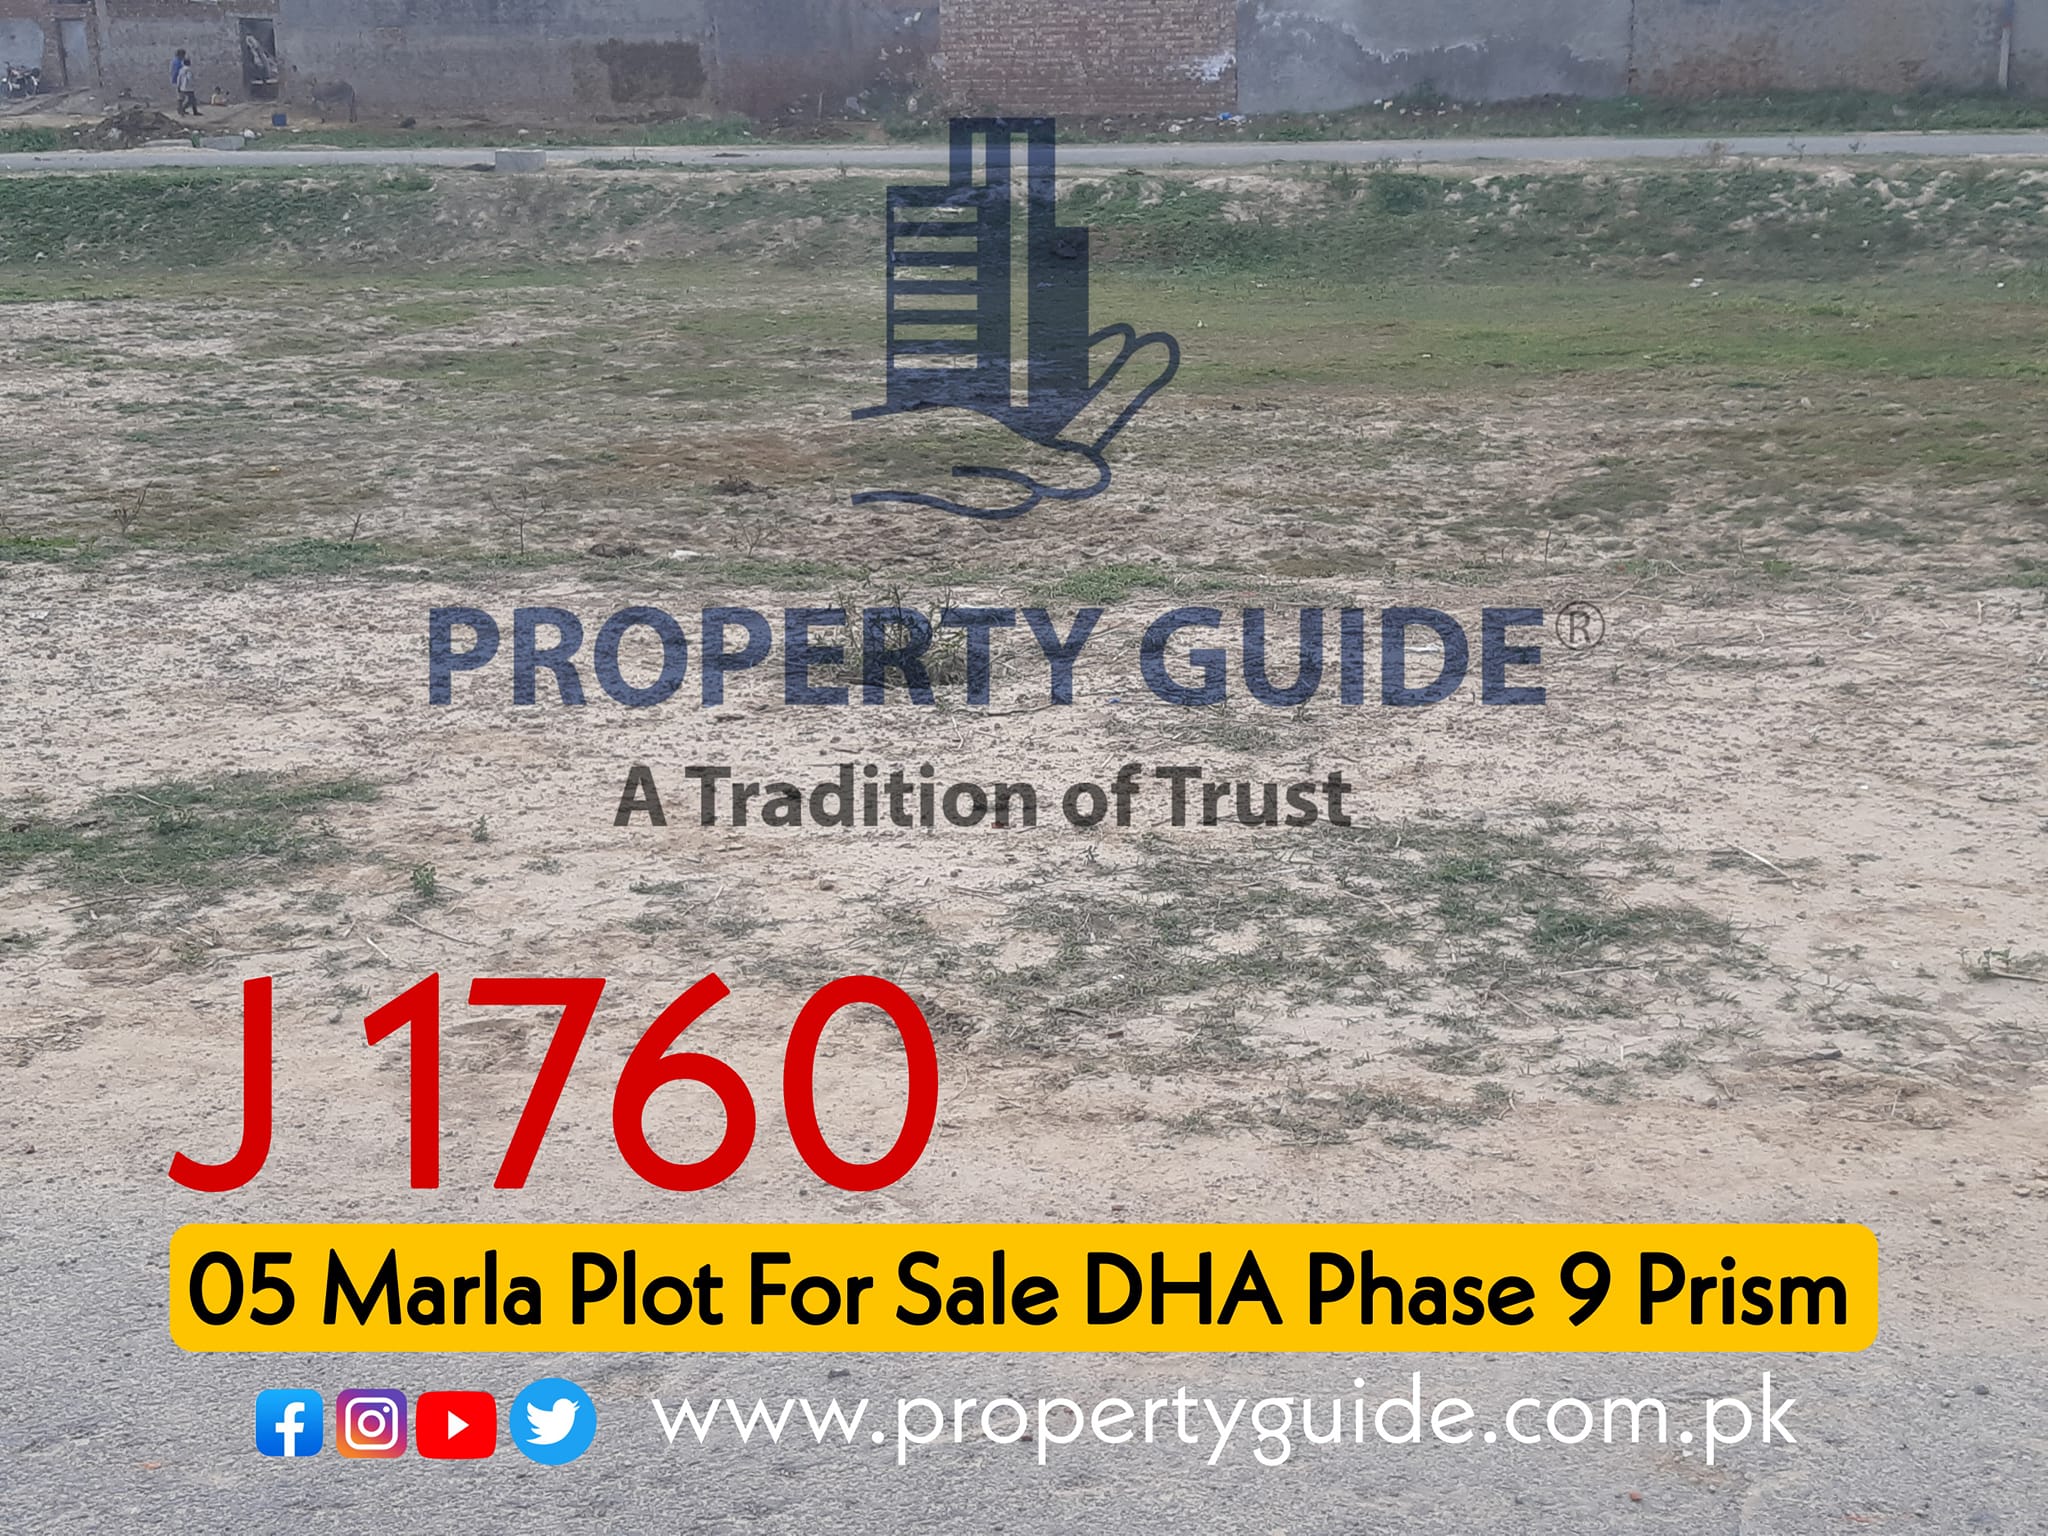 DHA Lahore Phase 9 Prism 5 Marla Plot Price